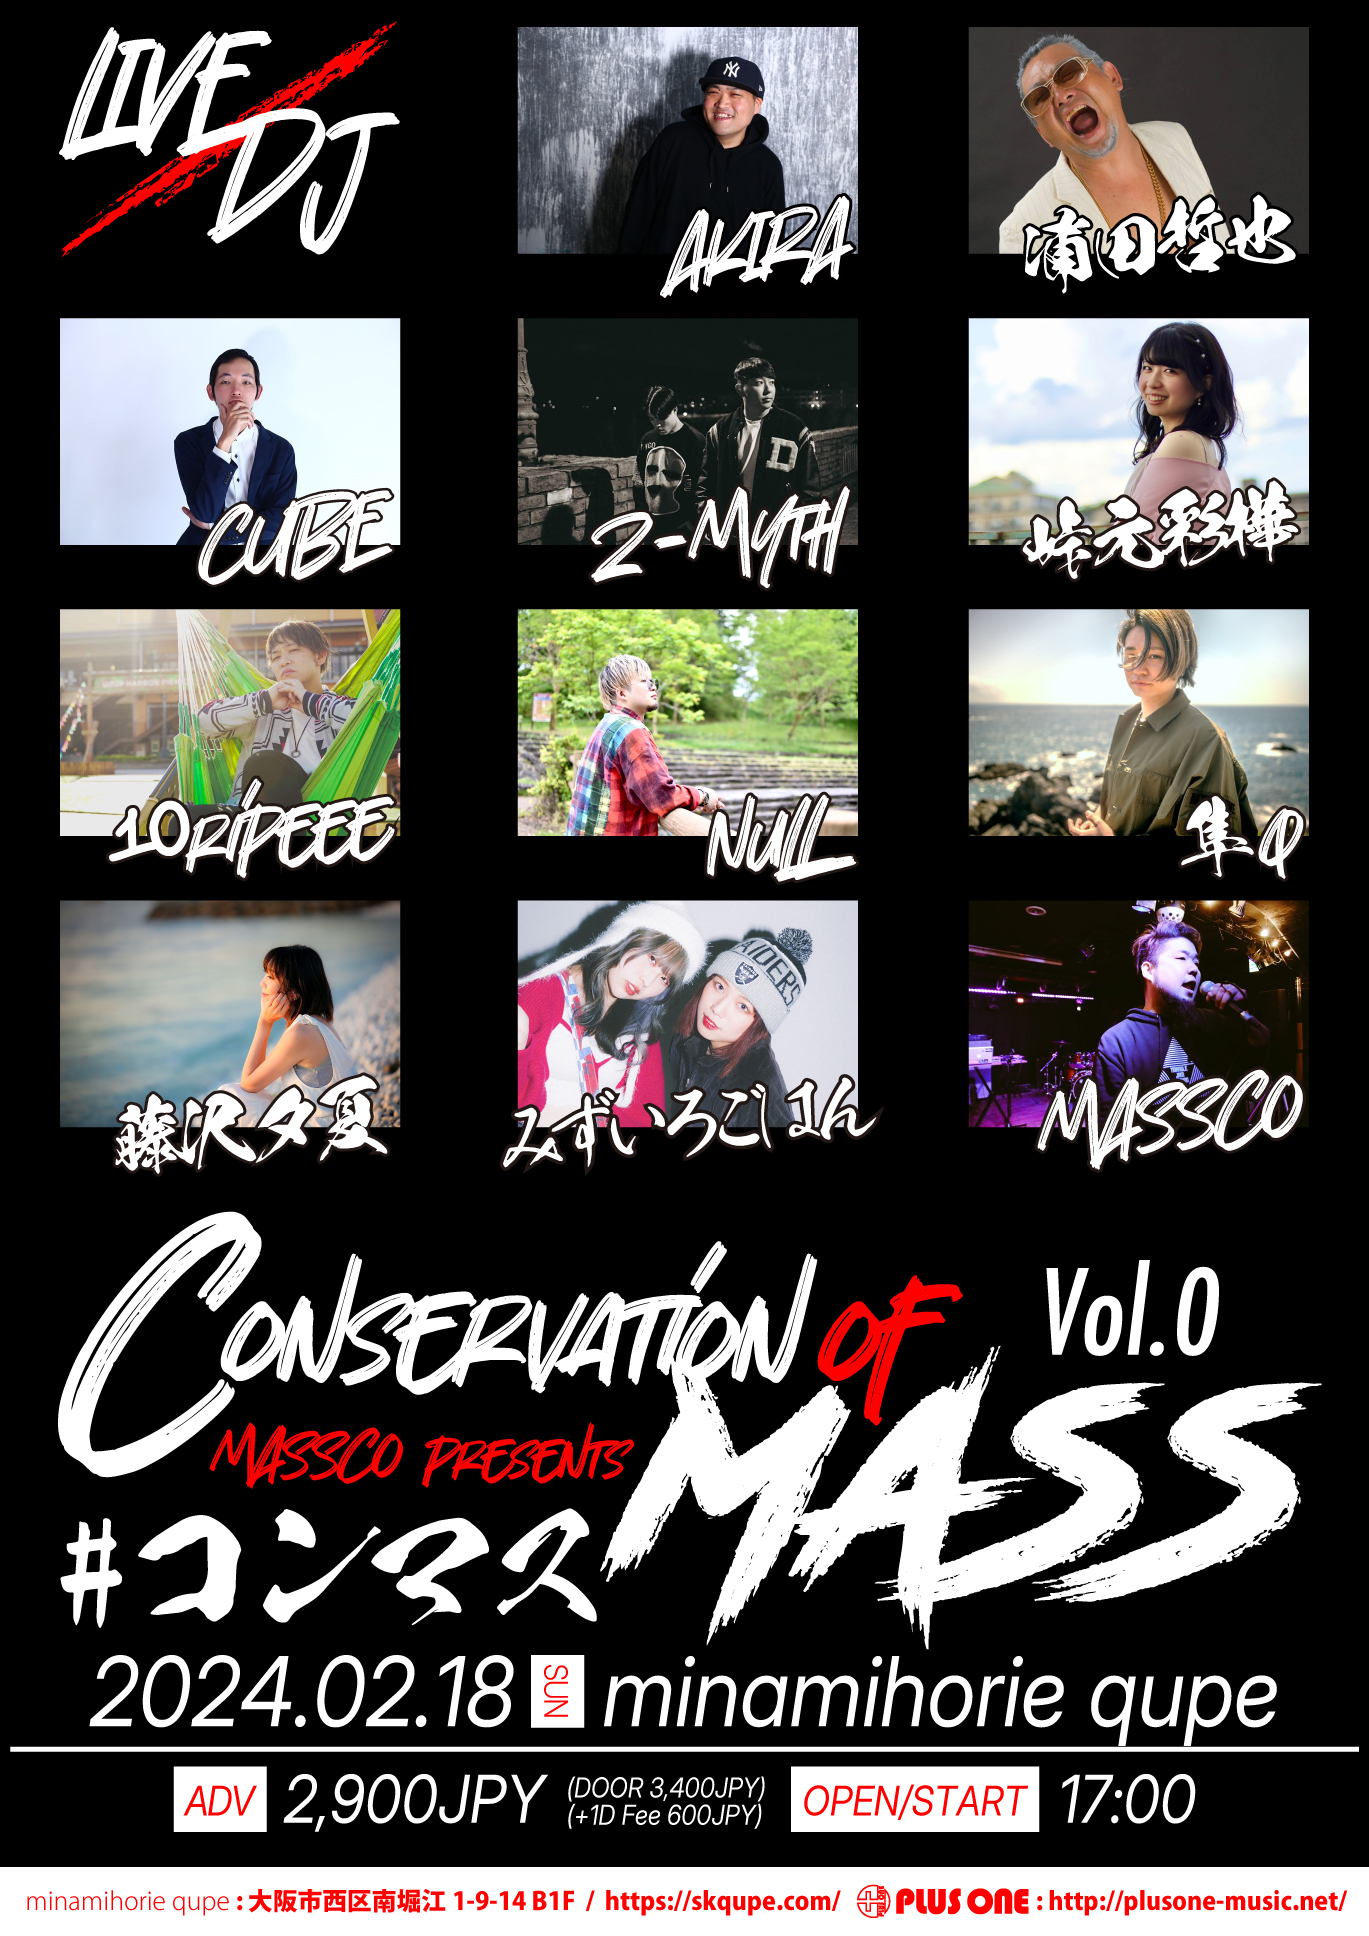 MASSCO presents "Conservation of MASS Vol.0"